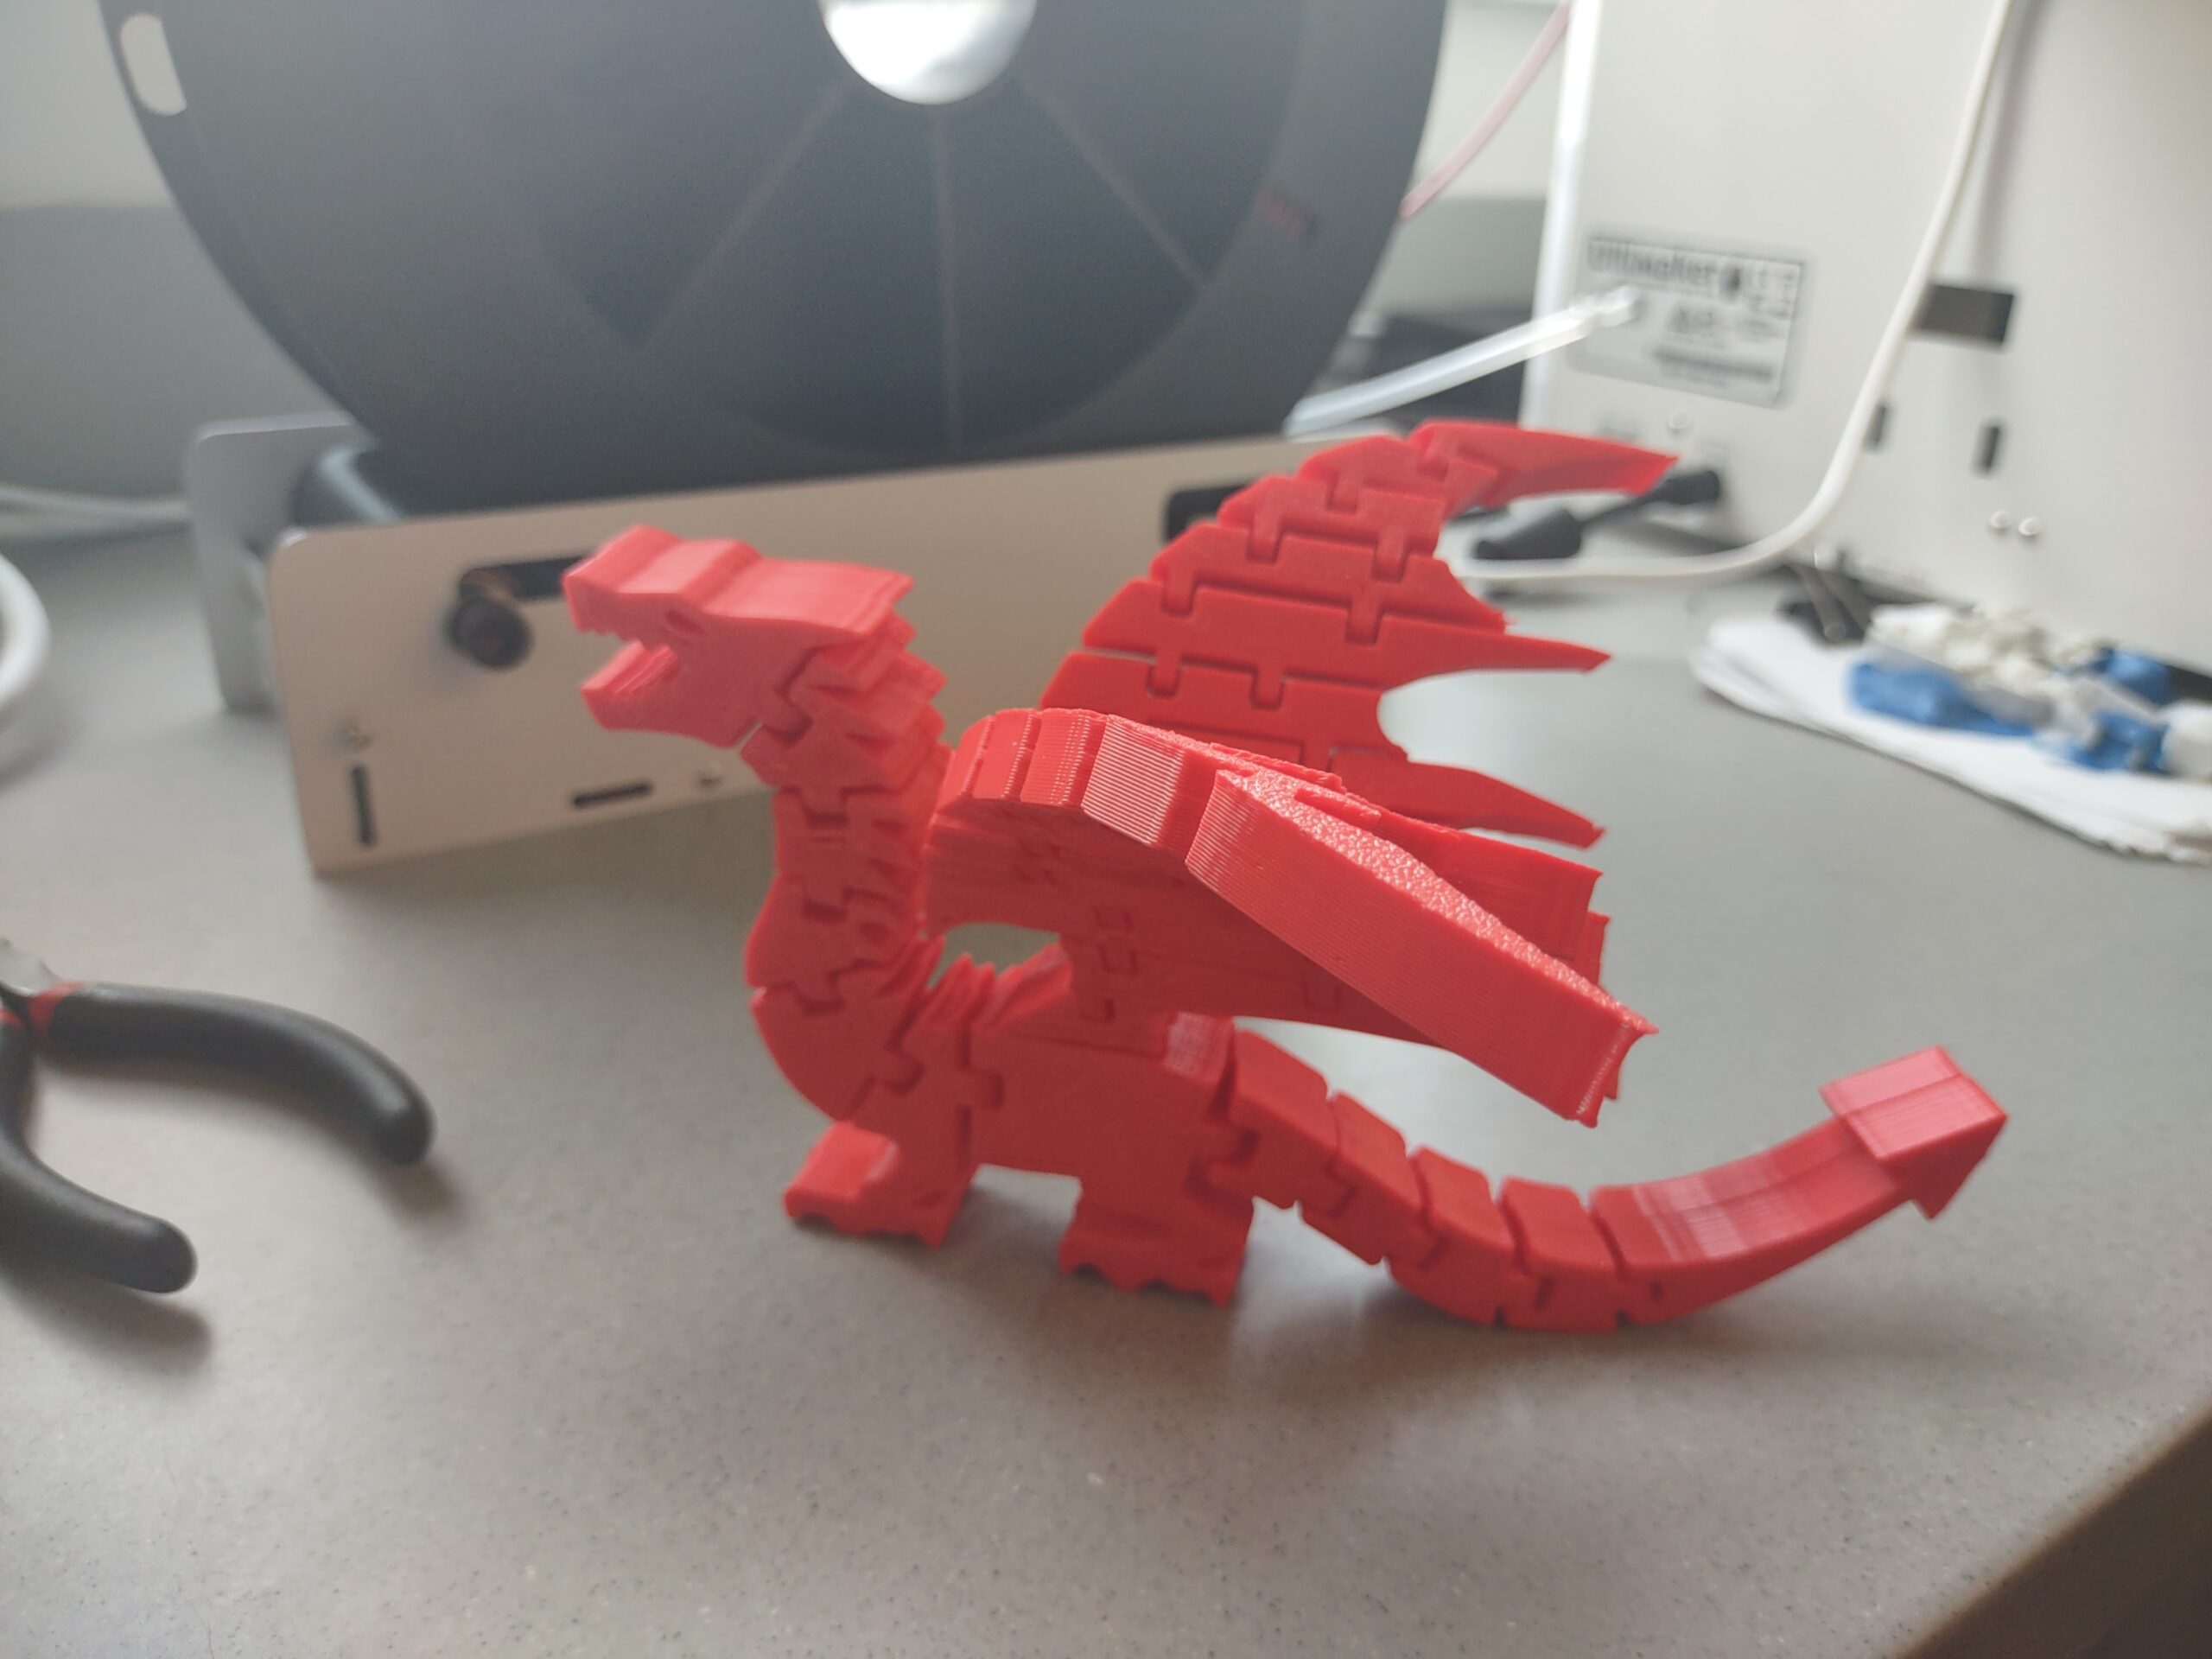 A 3D printed dragon.